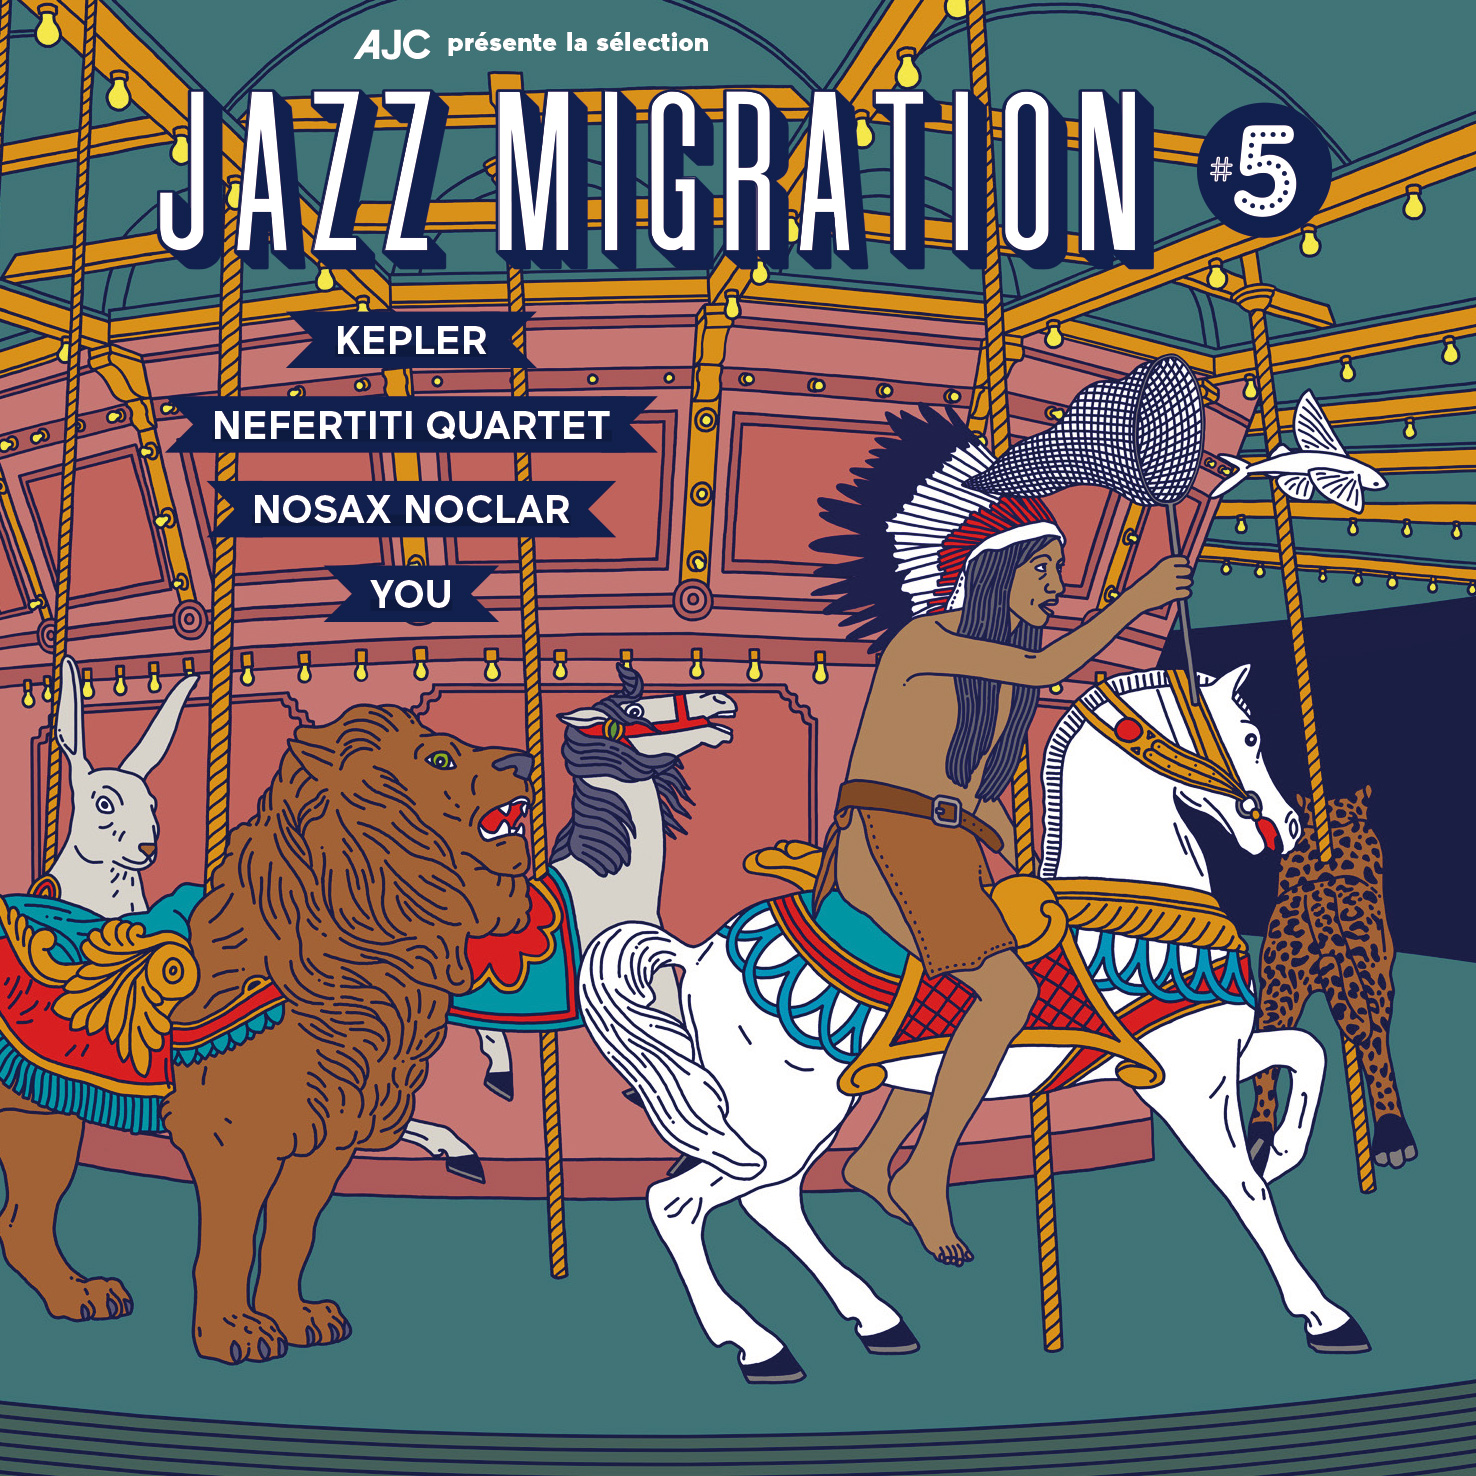 (c) Jazzmigration.com